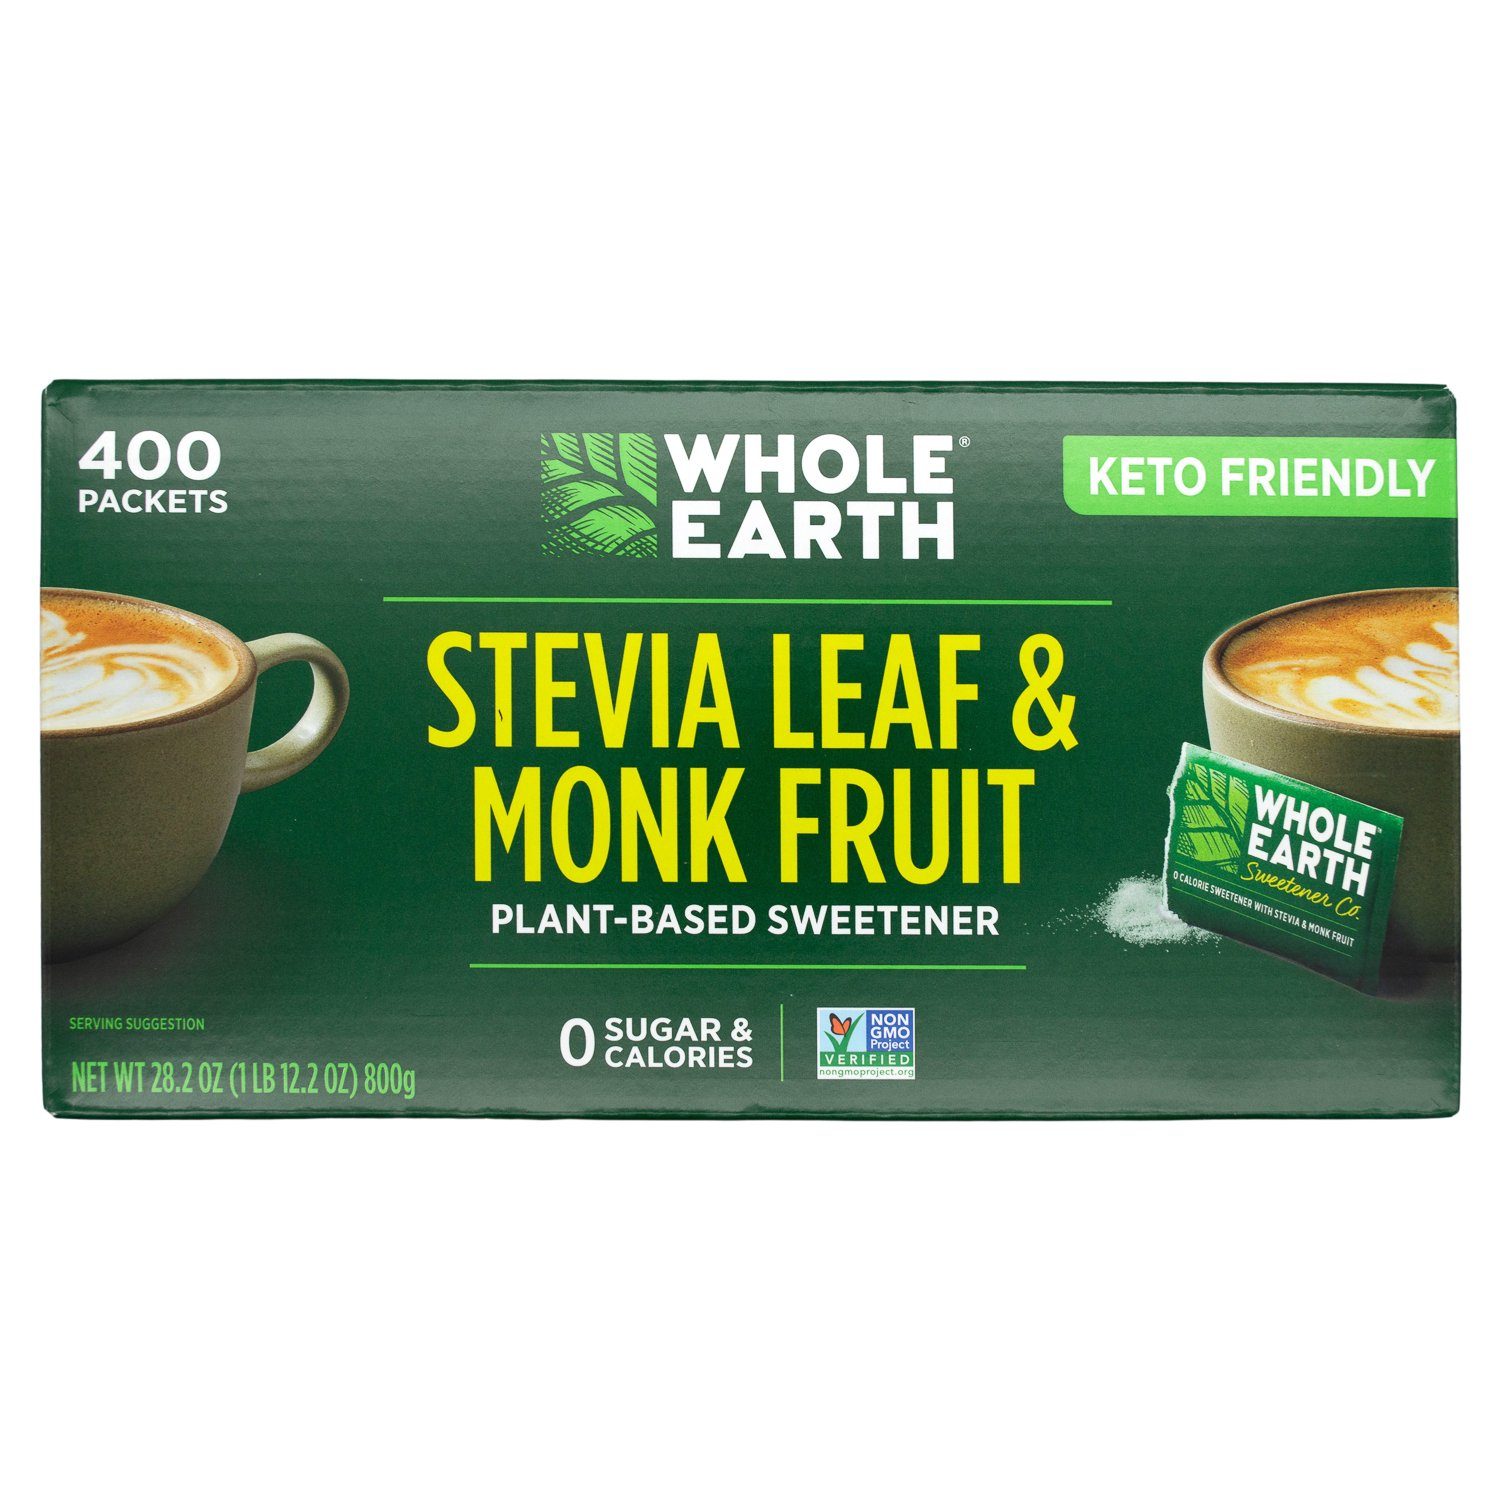 Whole Earth Sweetener Stevia and Monk Fruit Whole Earth Sweetener Packets 400 Count 